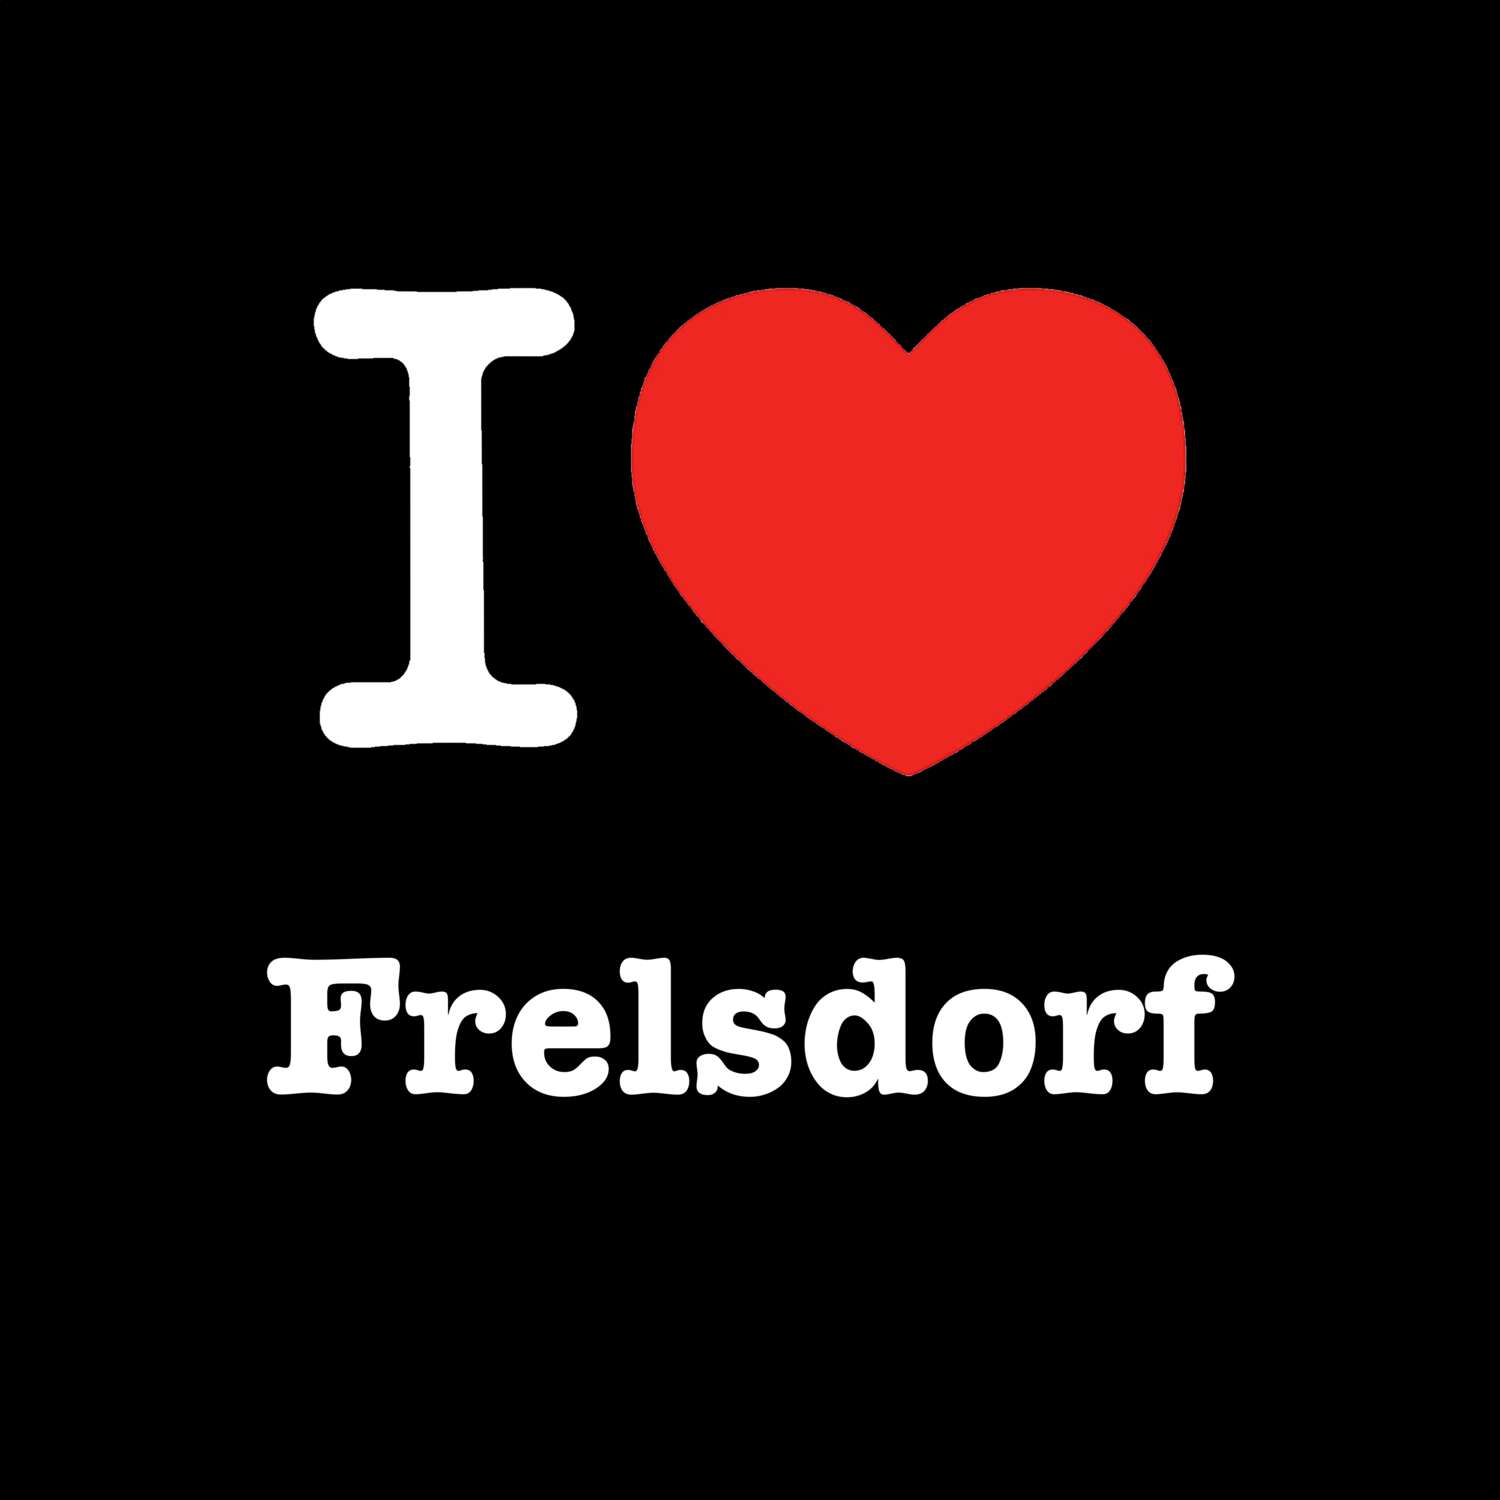 Frelsdorf T-Shirt »I love«